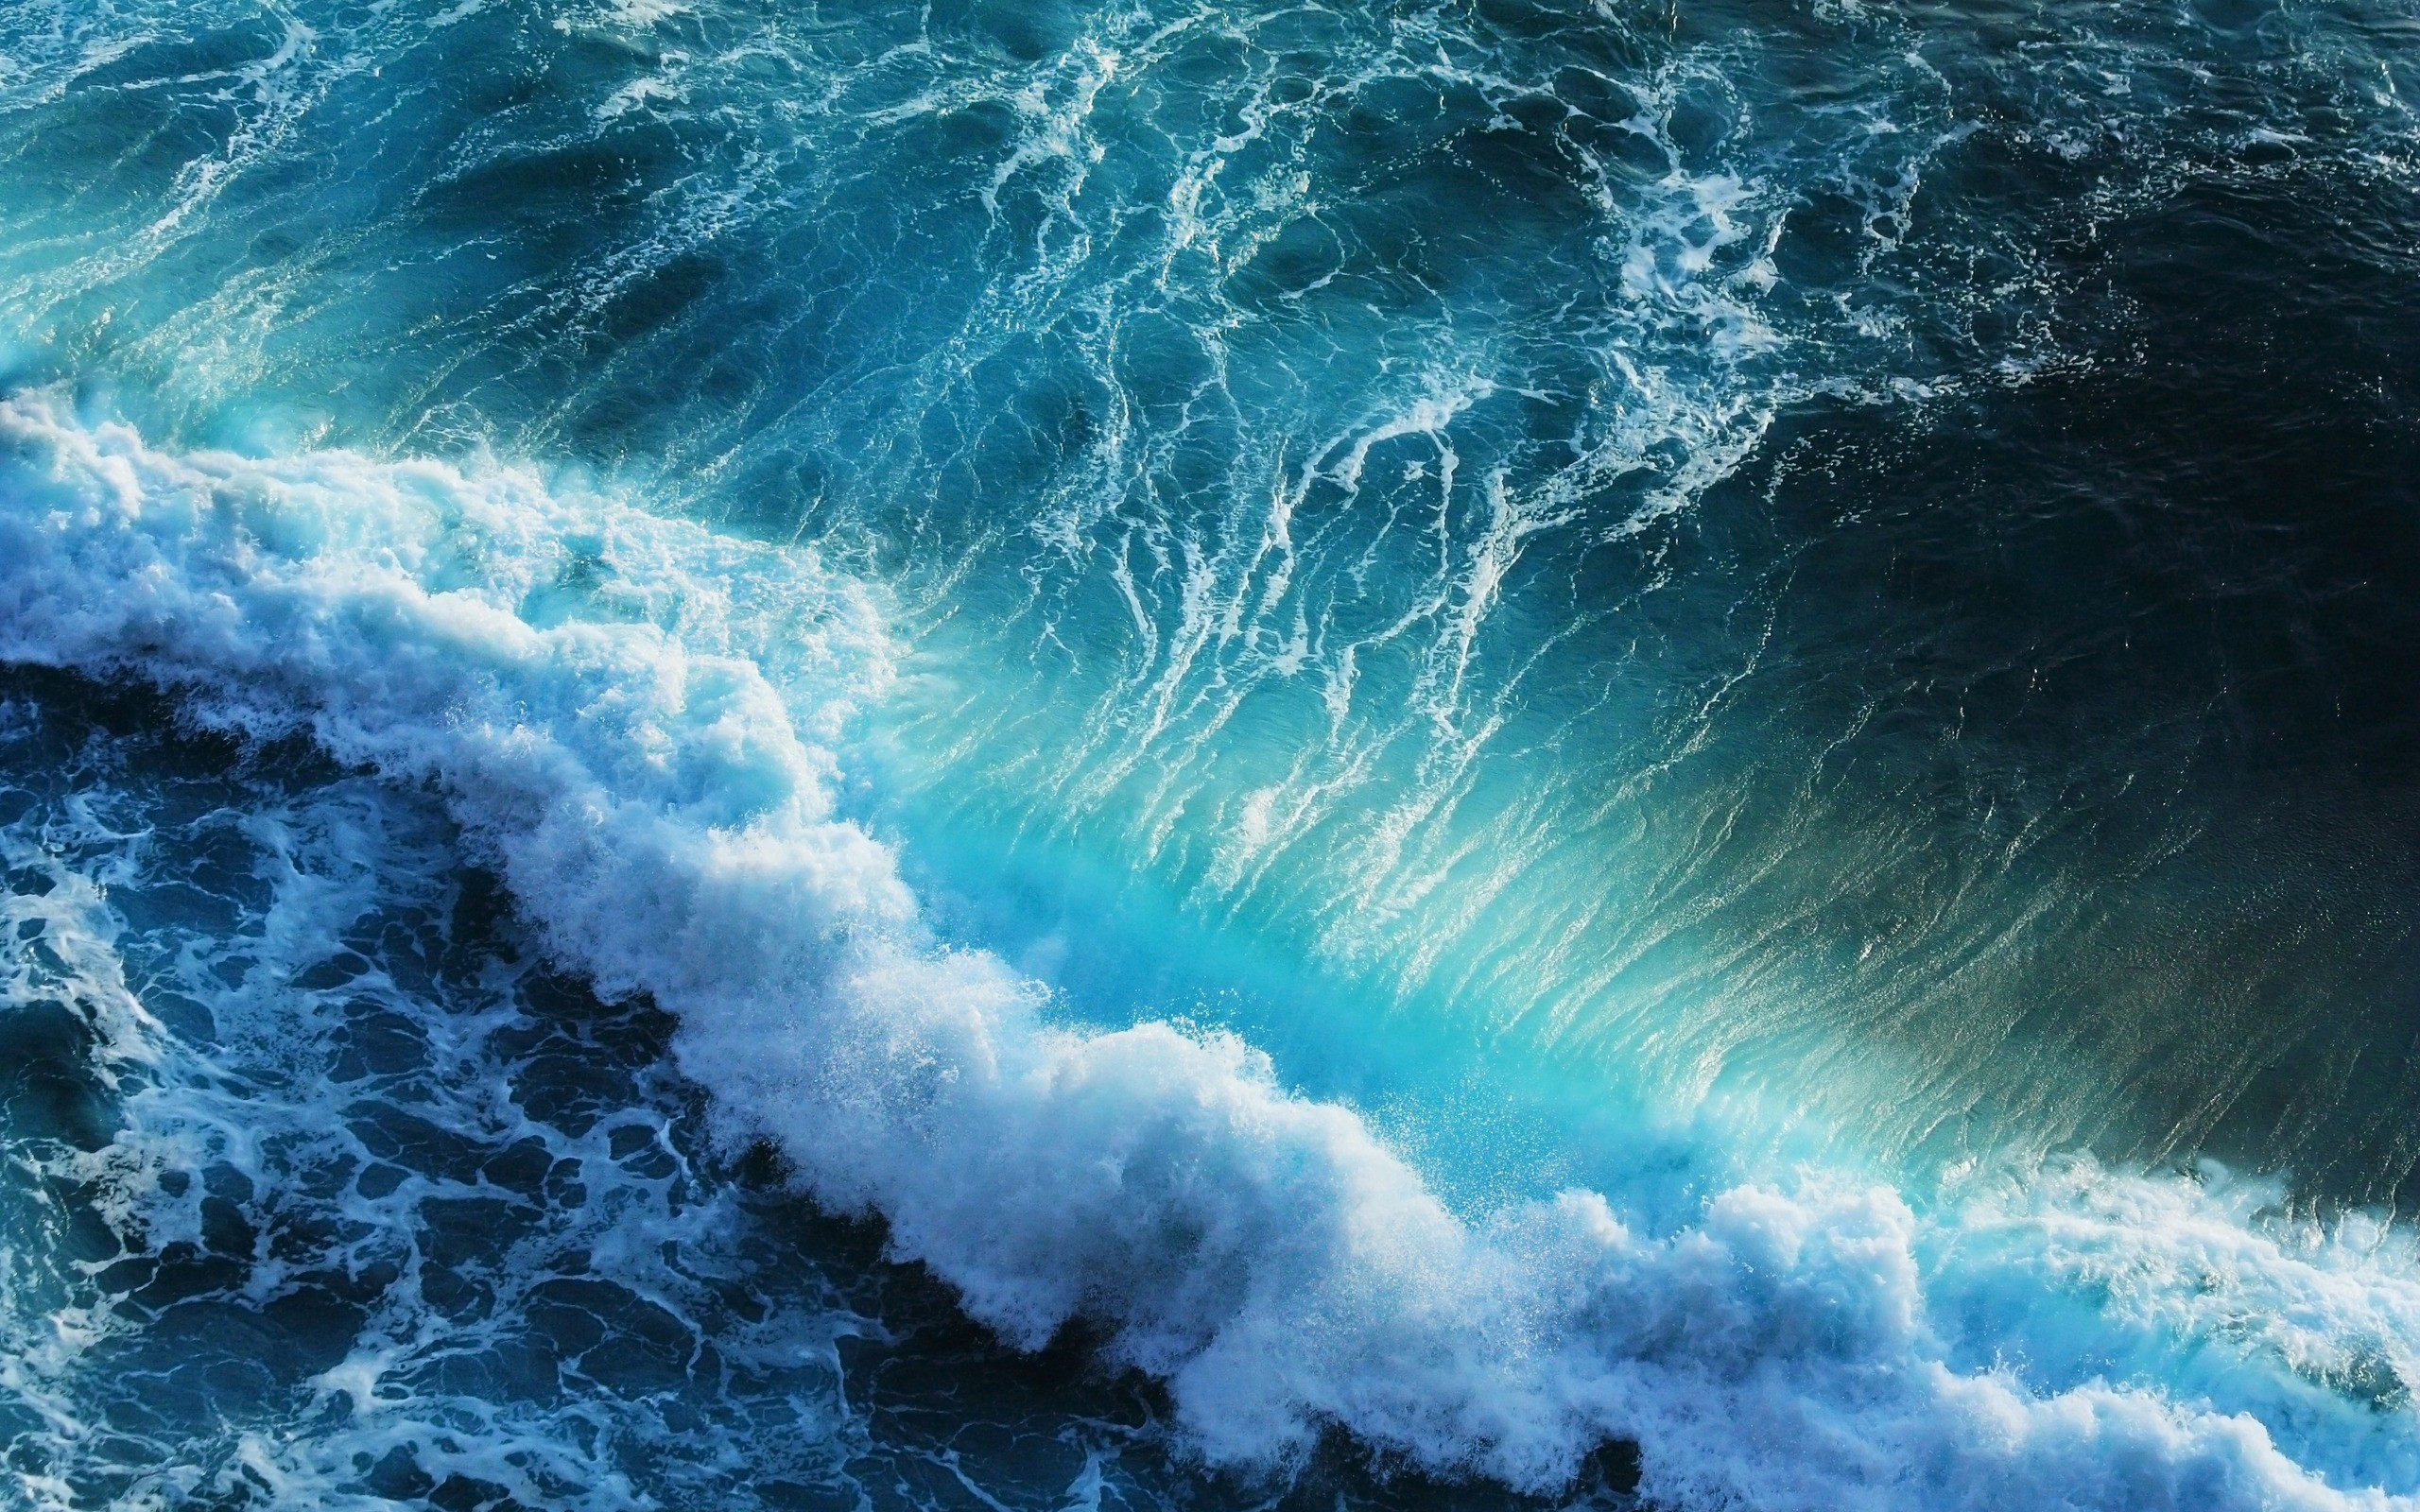 Ocean Wave Wallpaper Free Download